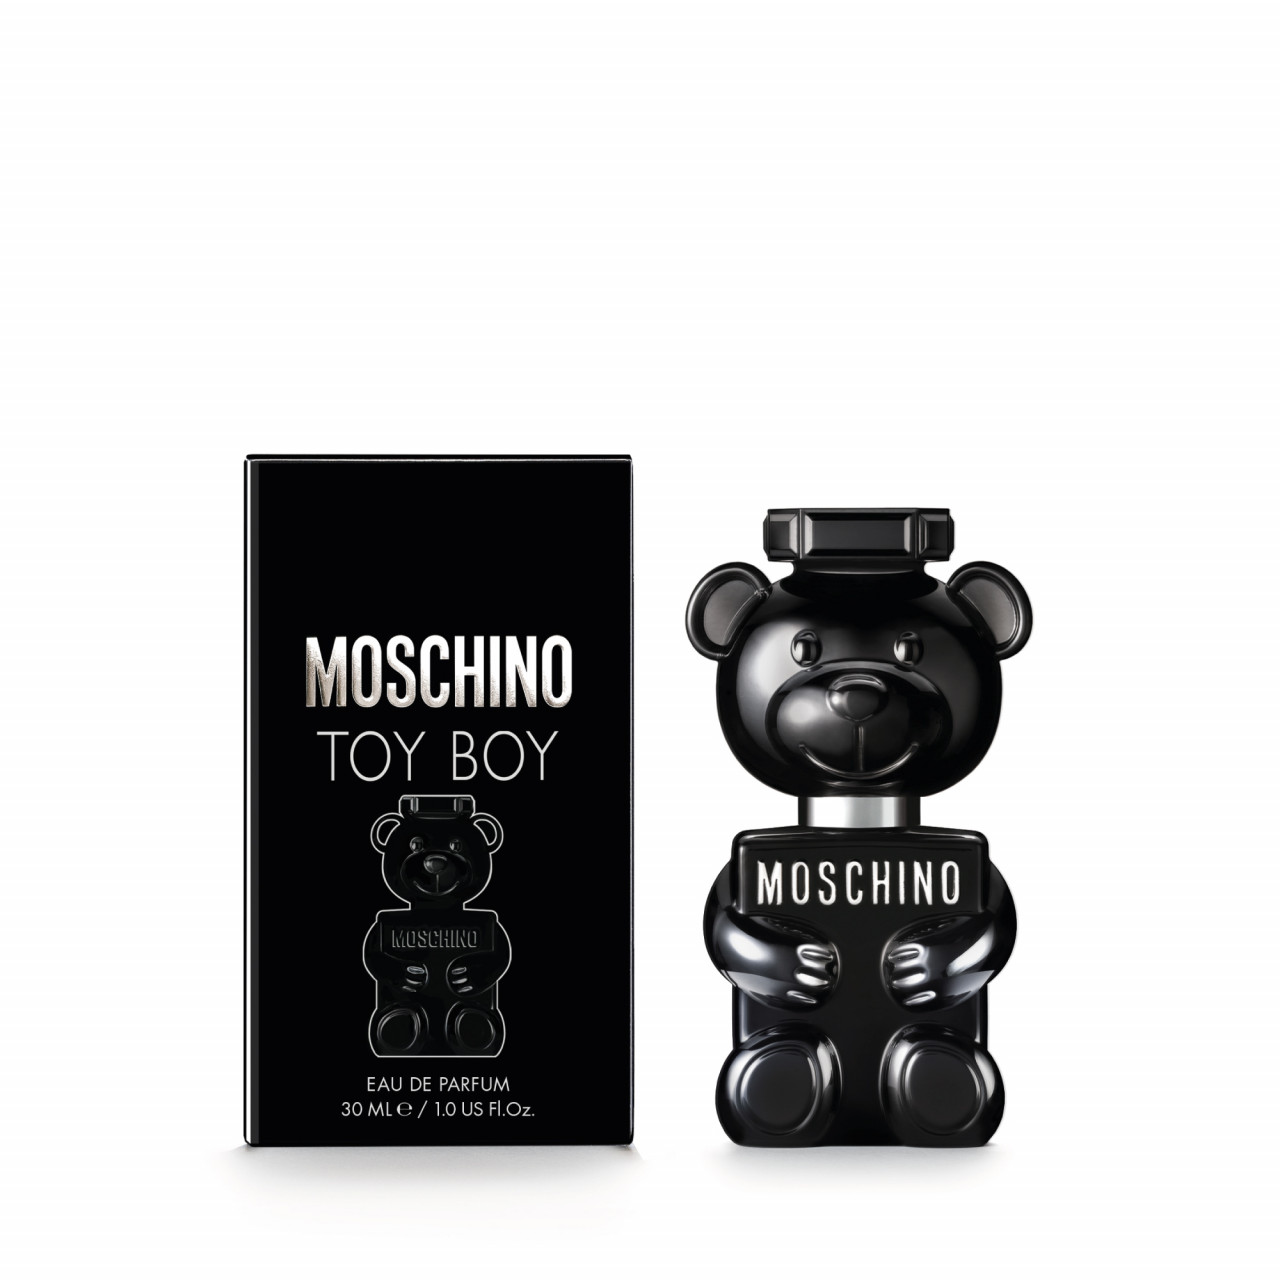 Moschino - Toy Boy Eau de Parfum -  30 ml